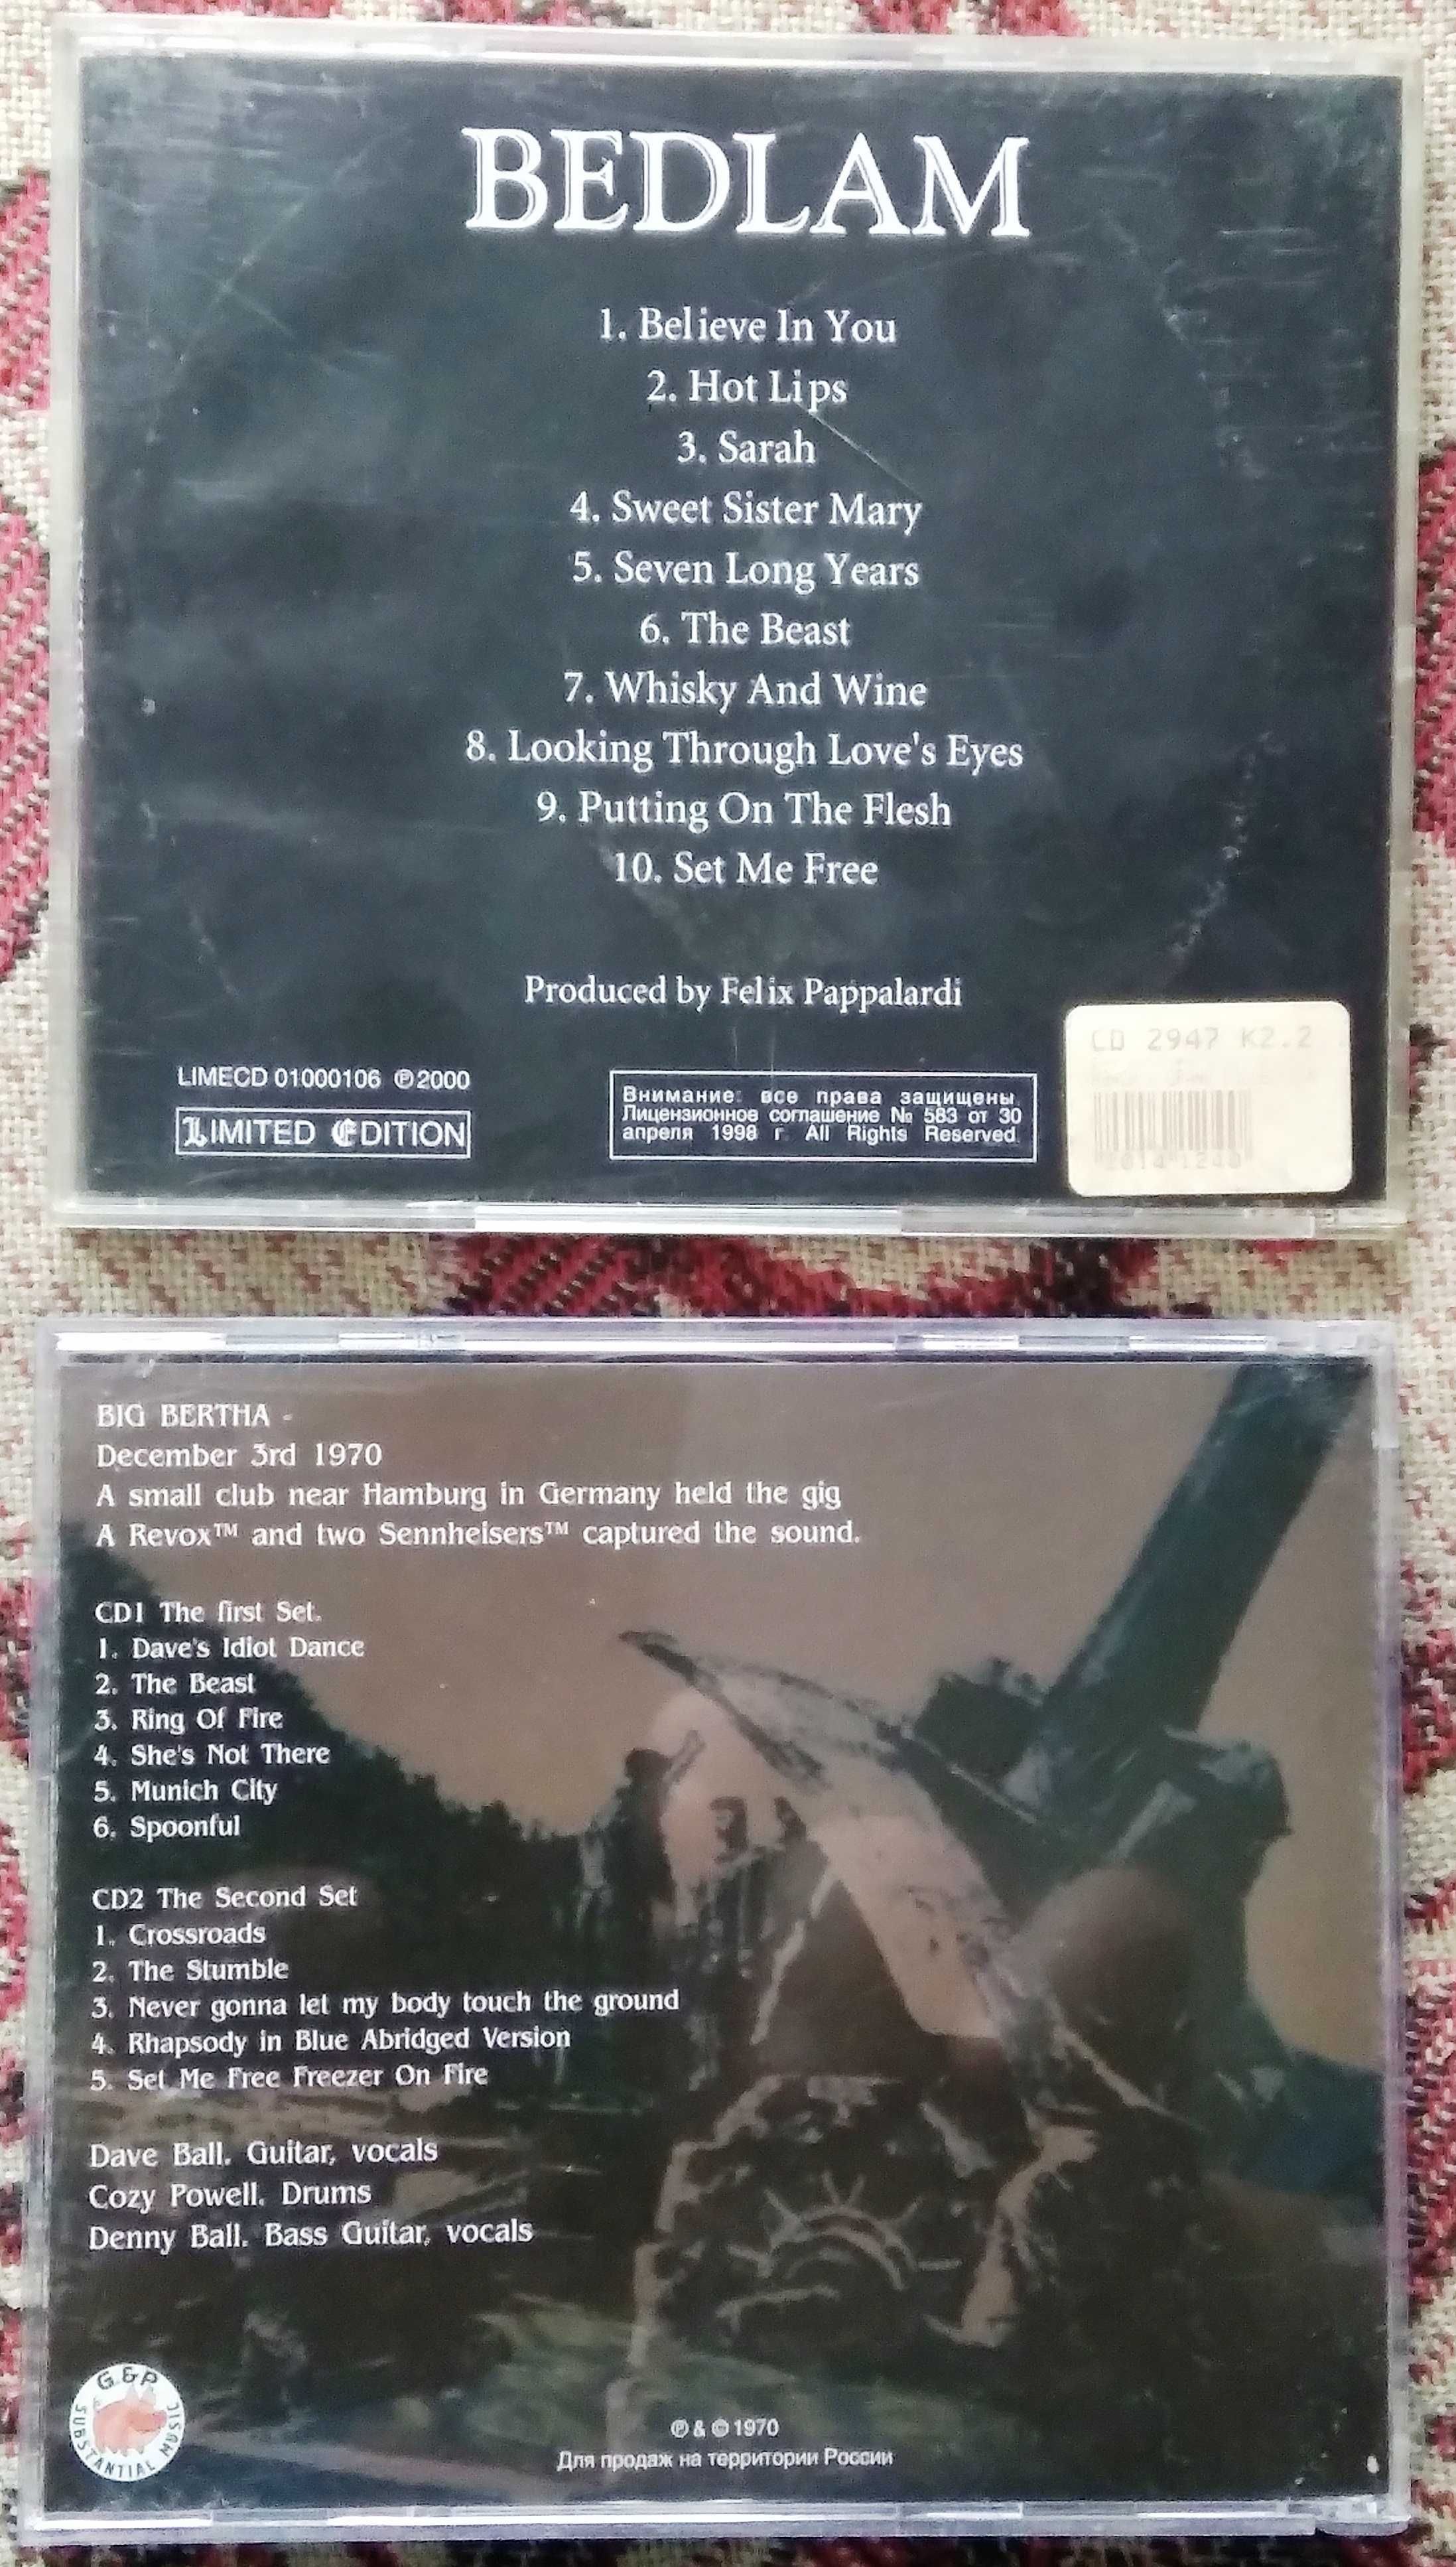 Cozy Powell /  Big Bertha / Bedlam - 3 CD аудио из коллекции - VG++ !!